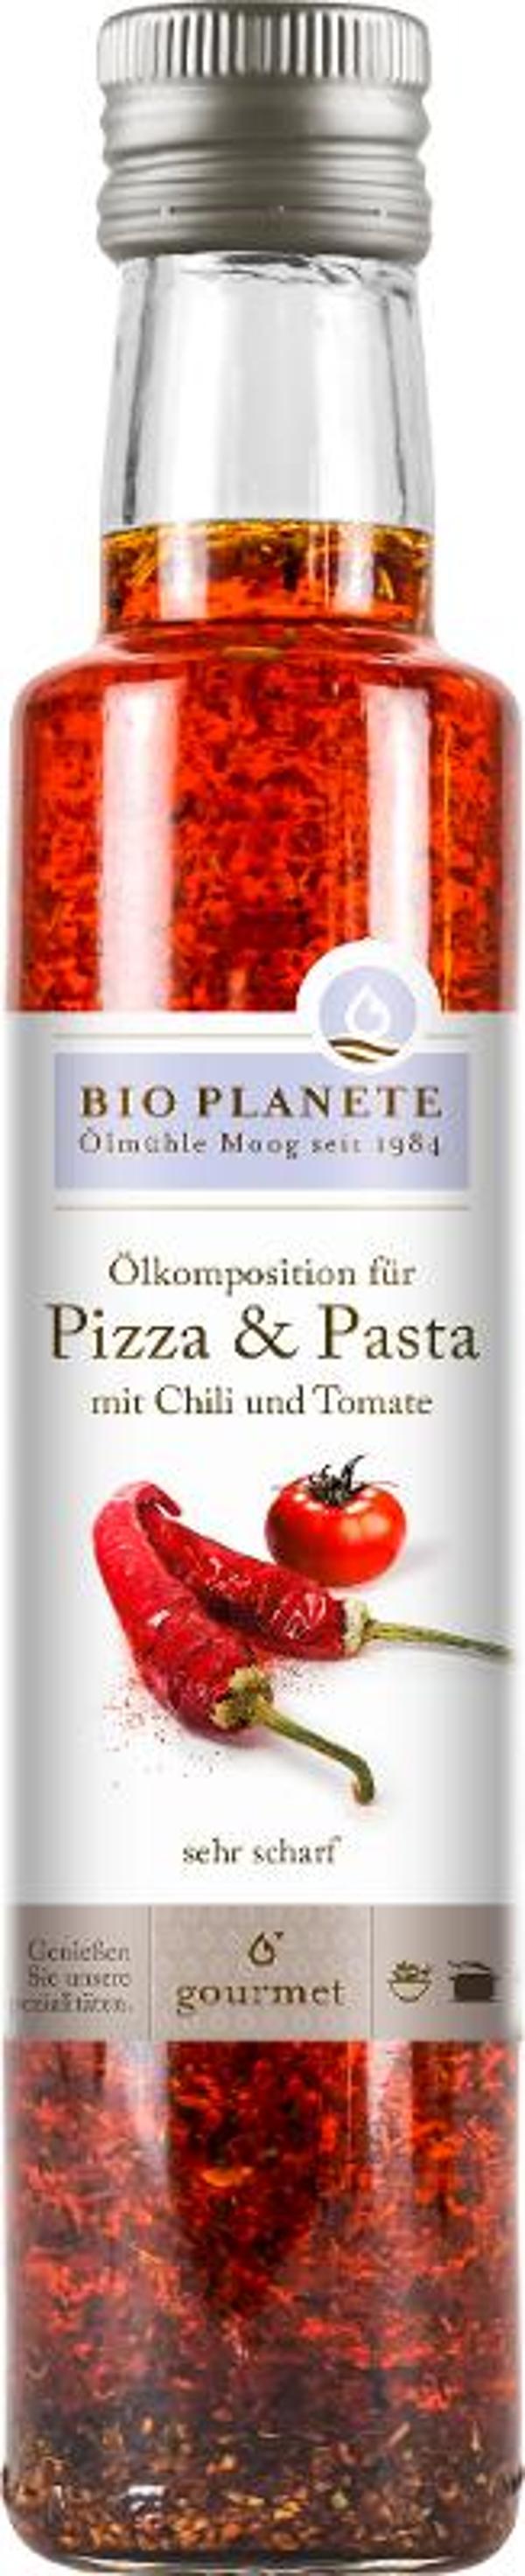 Produktfoto zu Pizza & Pasta Öl mit Chili